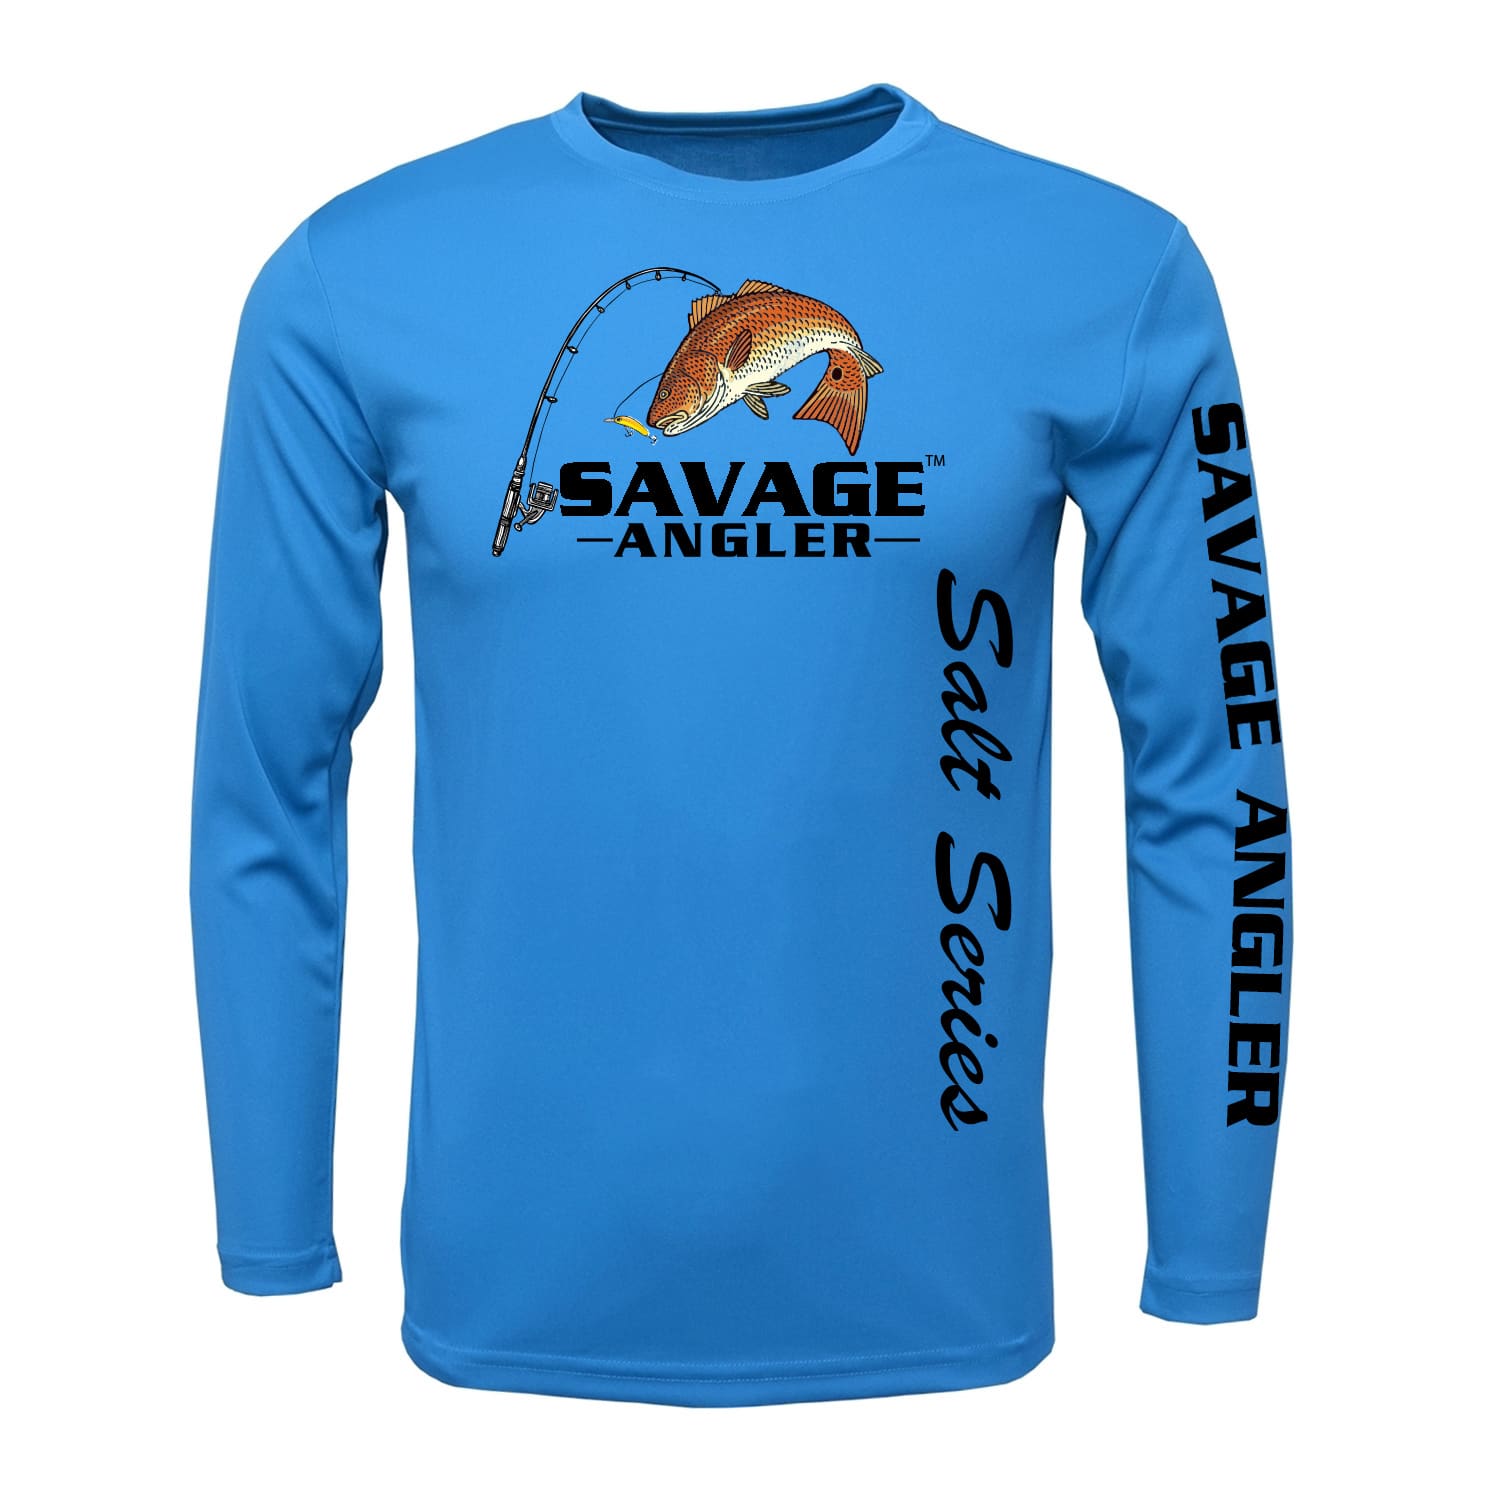 https://savageangler.com/wp-content/uploads/2021/02/Savage-Angler-Salt-Series-Fishing-Shirt_Columbia_Blue.jpg